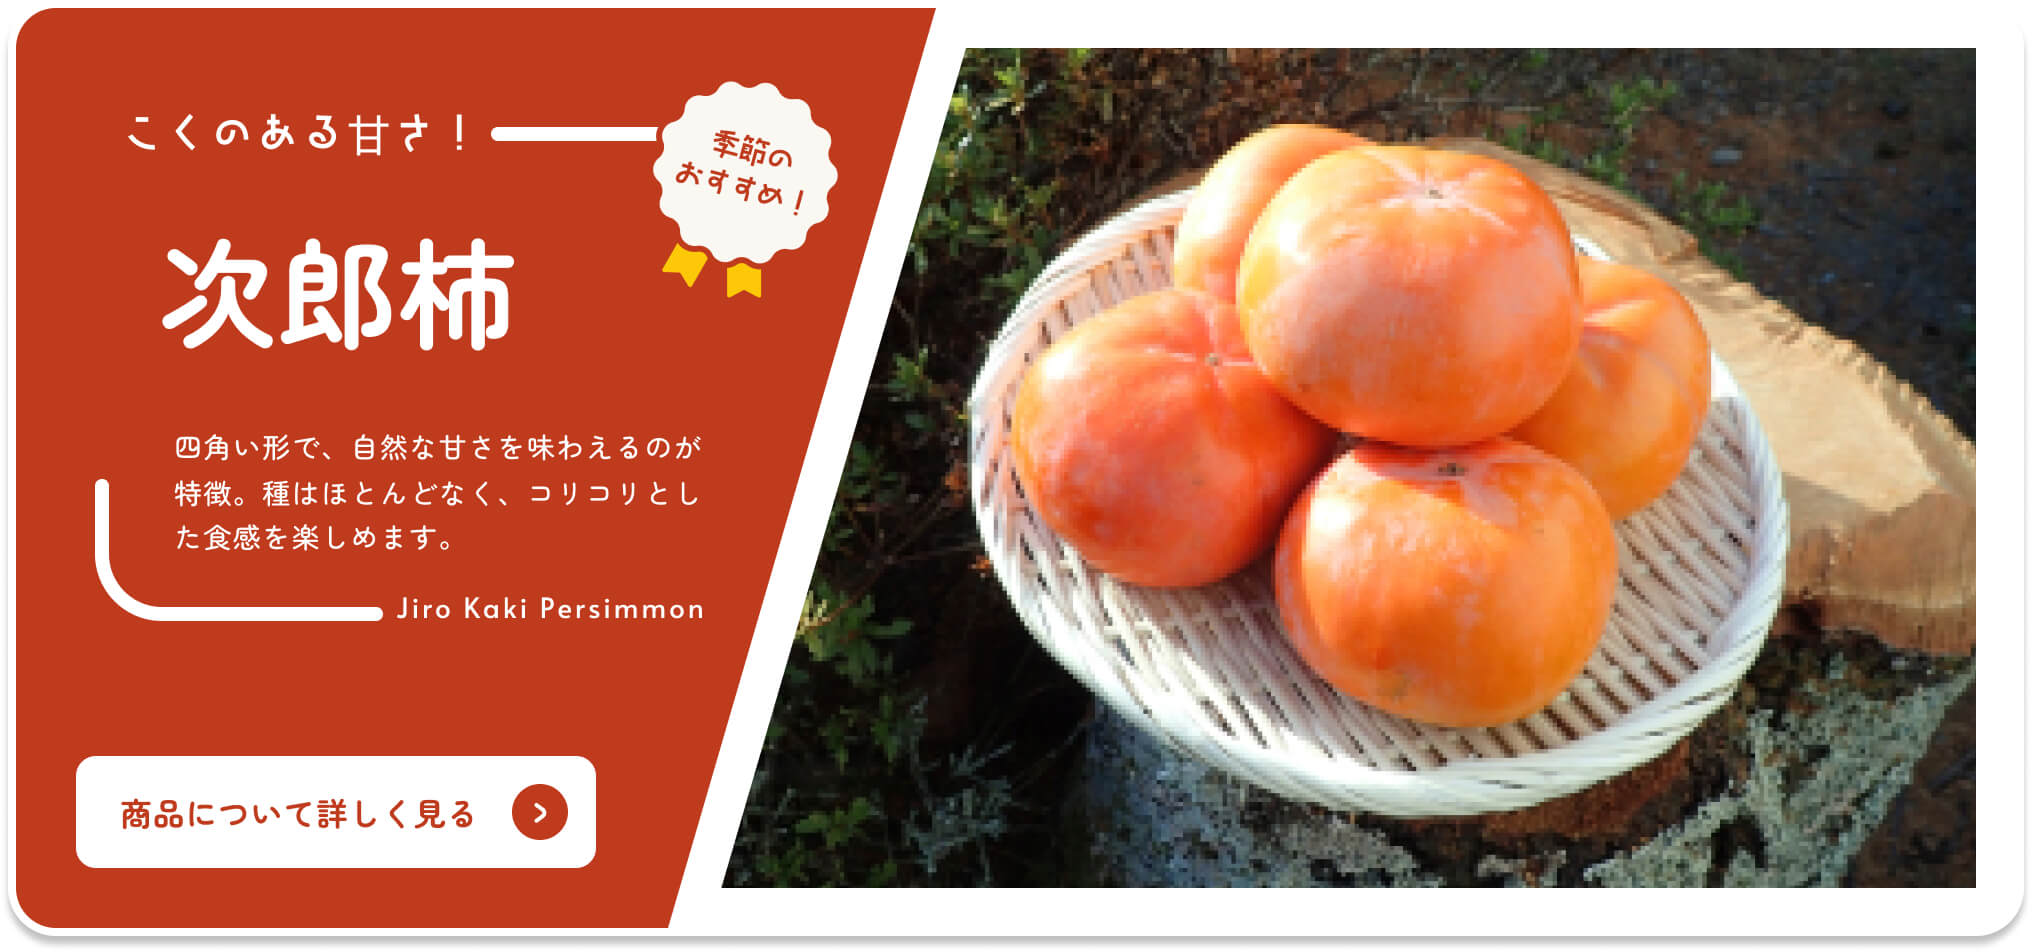 Von Shizuoka Online-Katalog Saisonale Empfehlung Jiro Persimmon